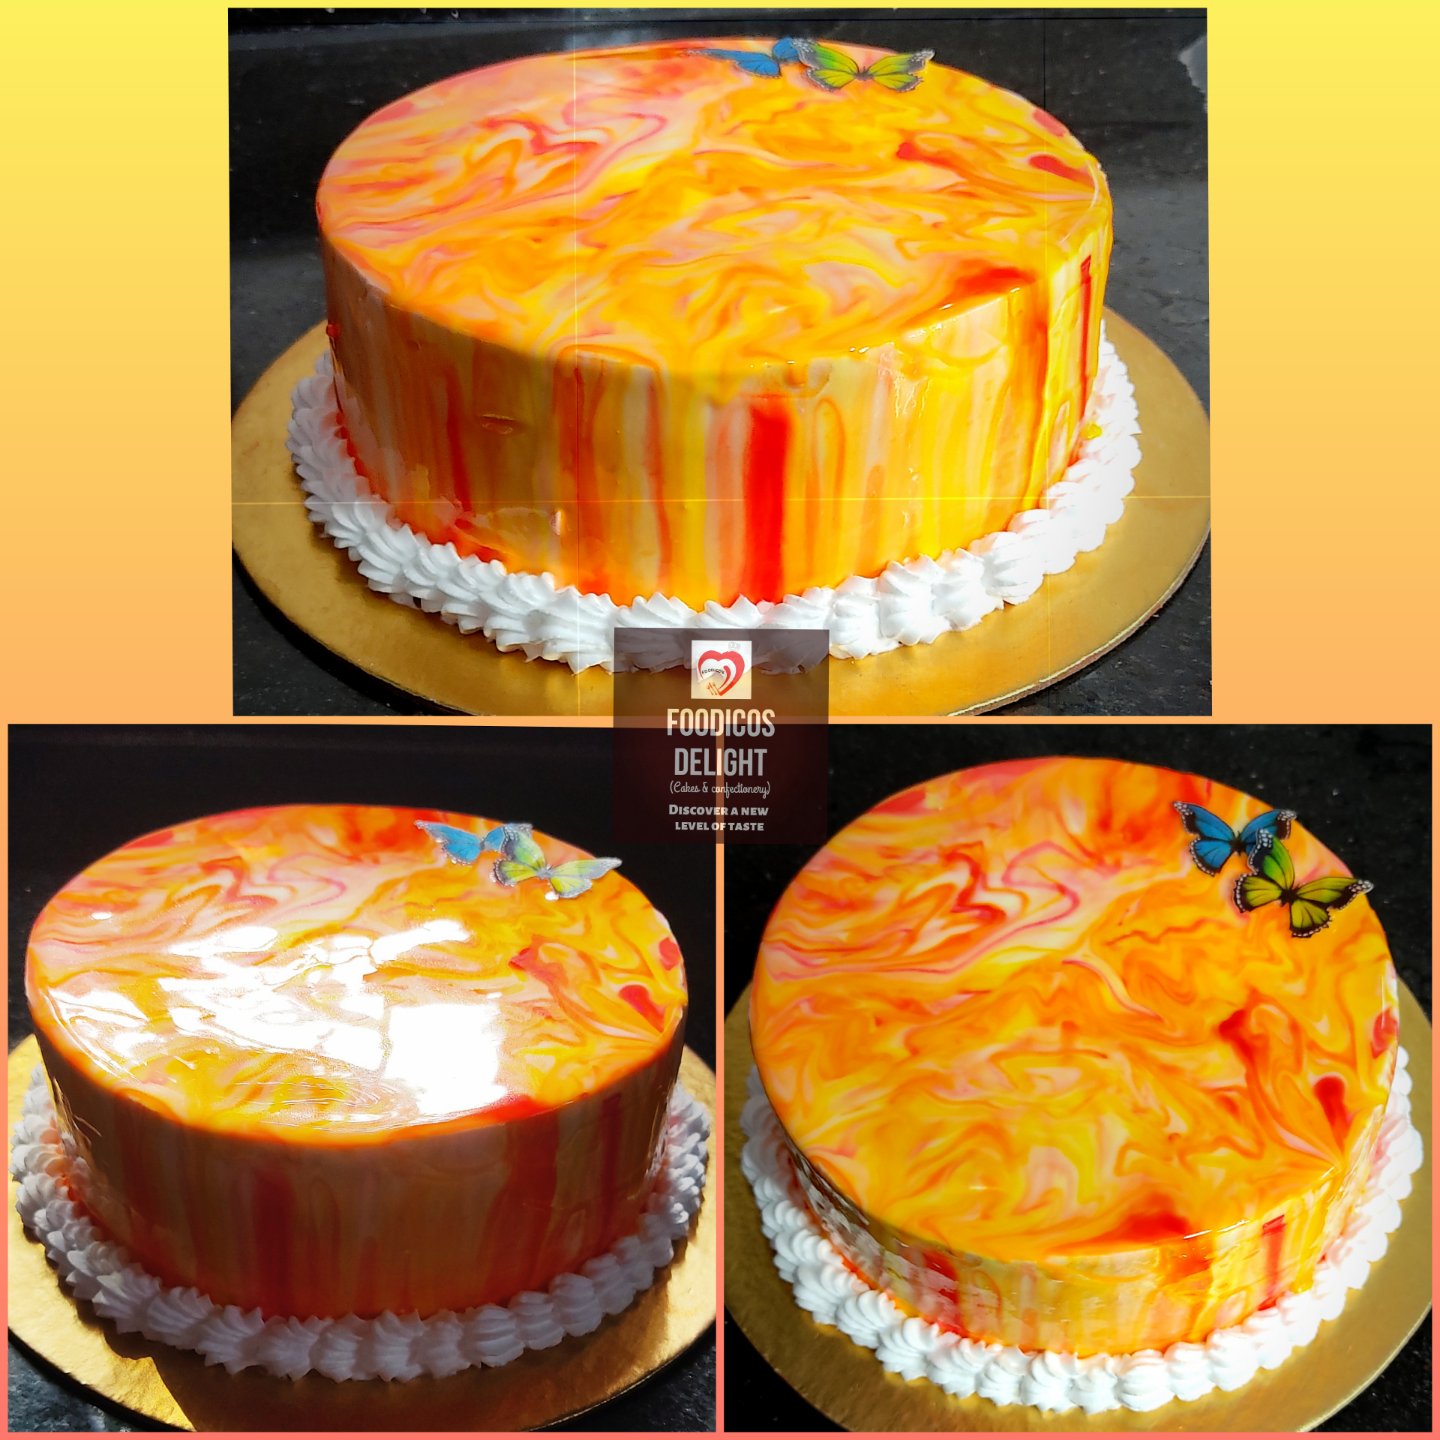 Cakeshoppondicherry #bakeryinpondicherry #bestcakeshop #onlinecakeshop  #birthdaycake #designscake